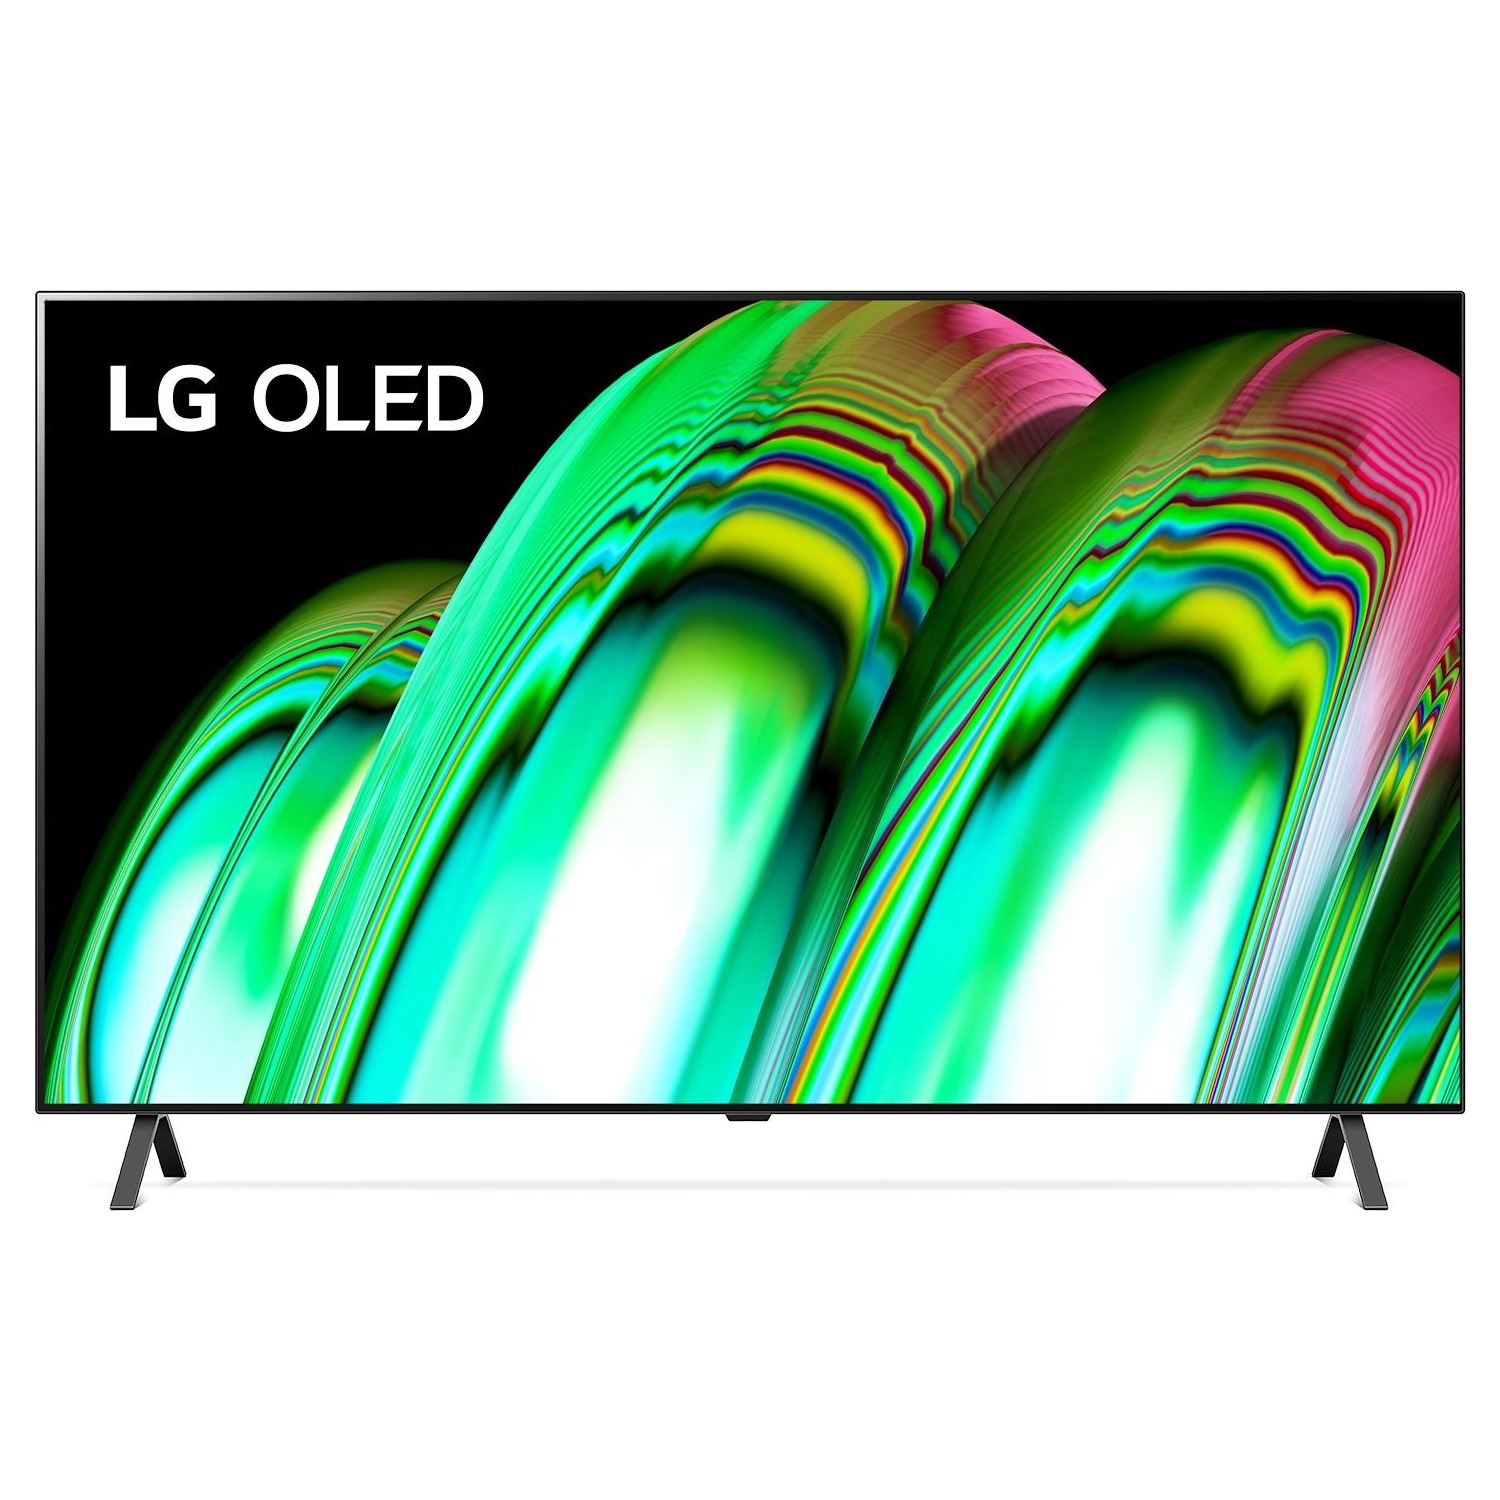 Immagine per TV OLED UHD 4K Smart LG OLED48A26 da DIMOStore